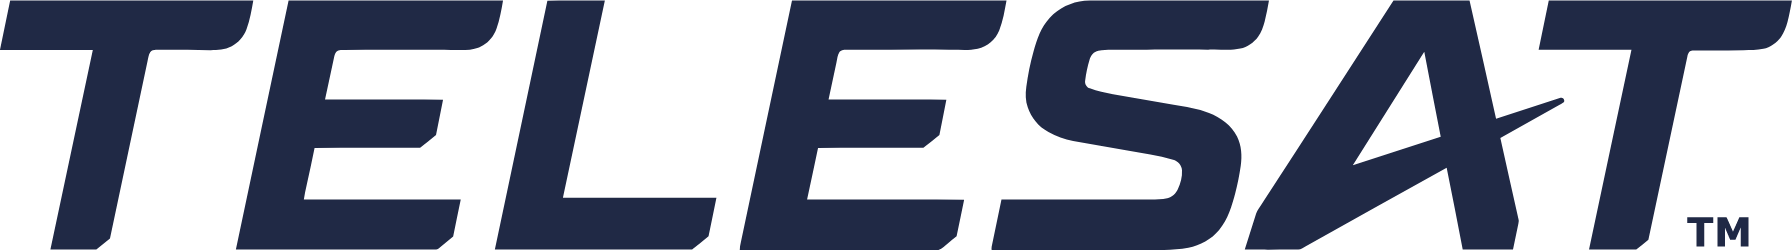 Telesat logo large (transparent PNG)